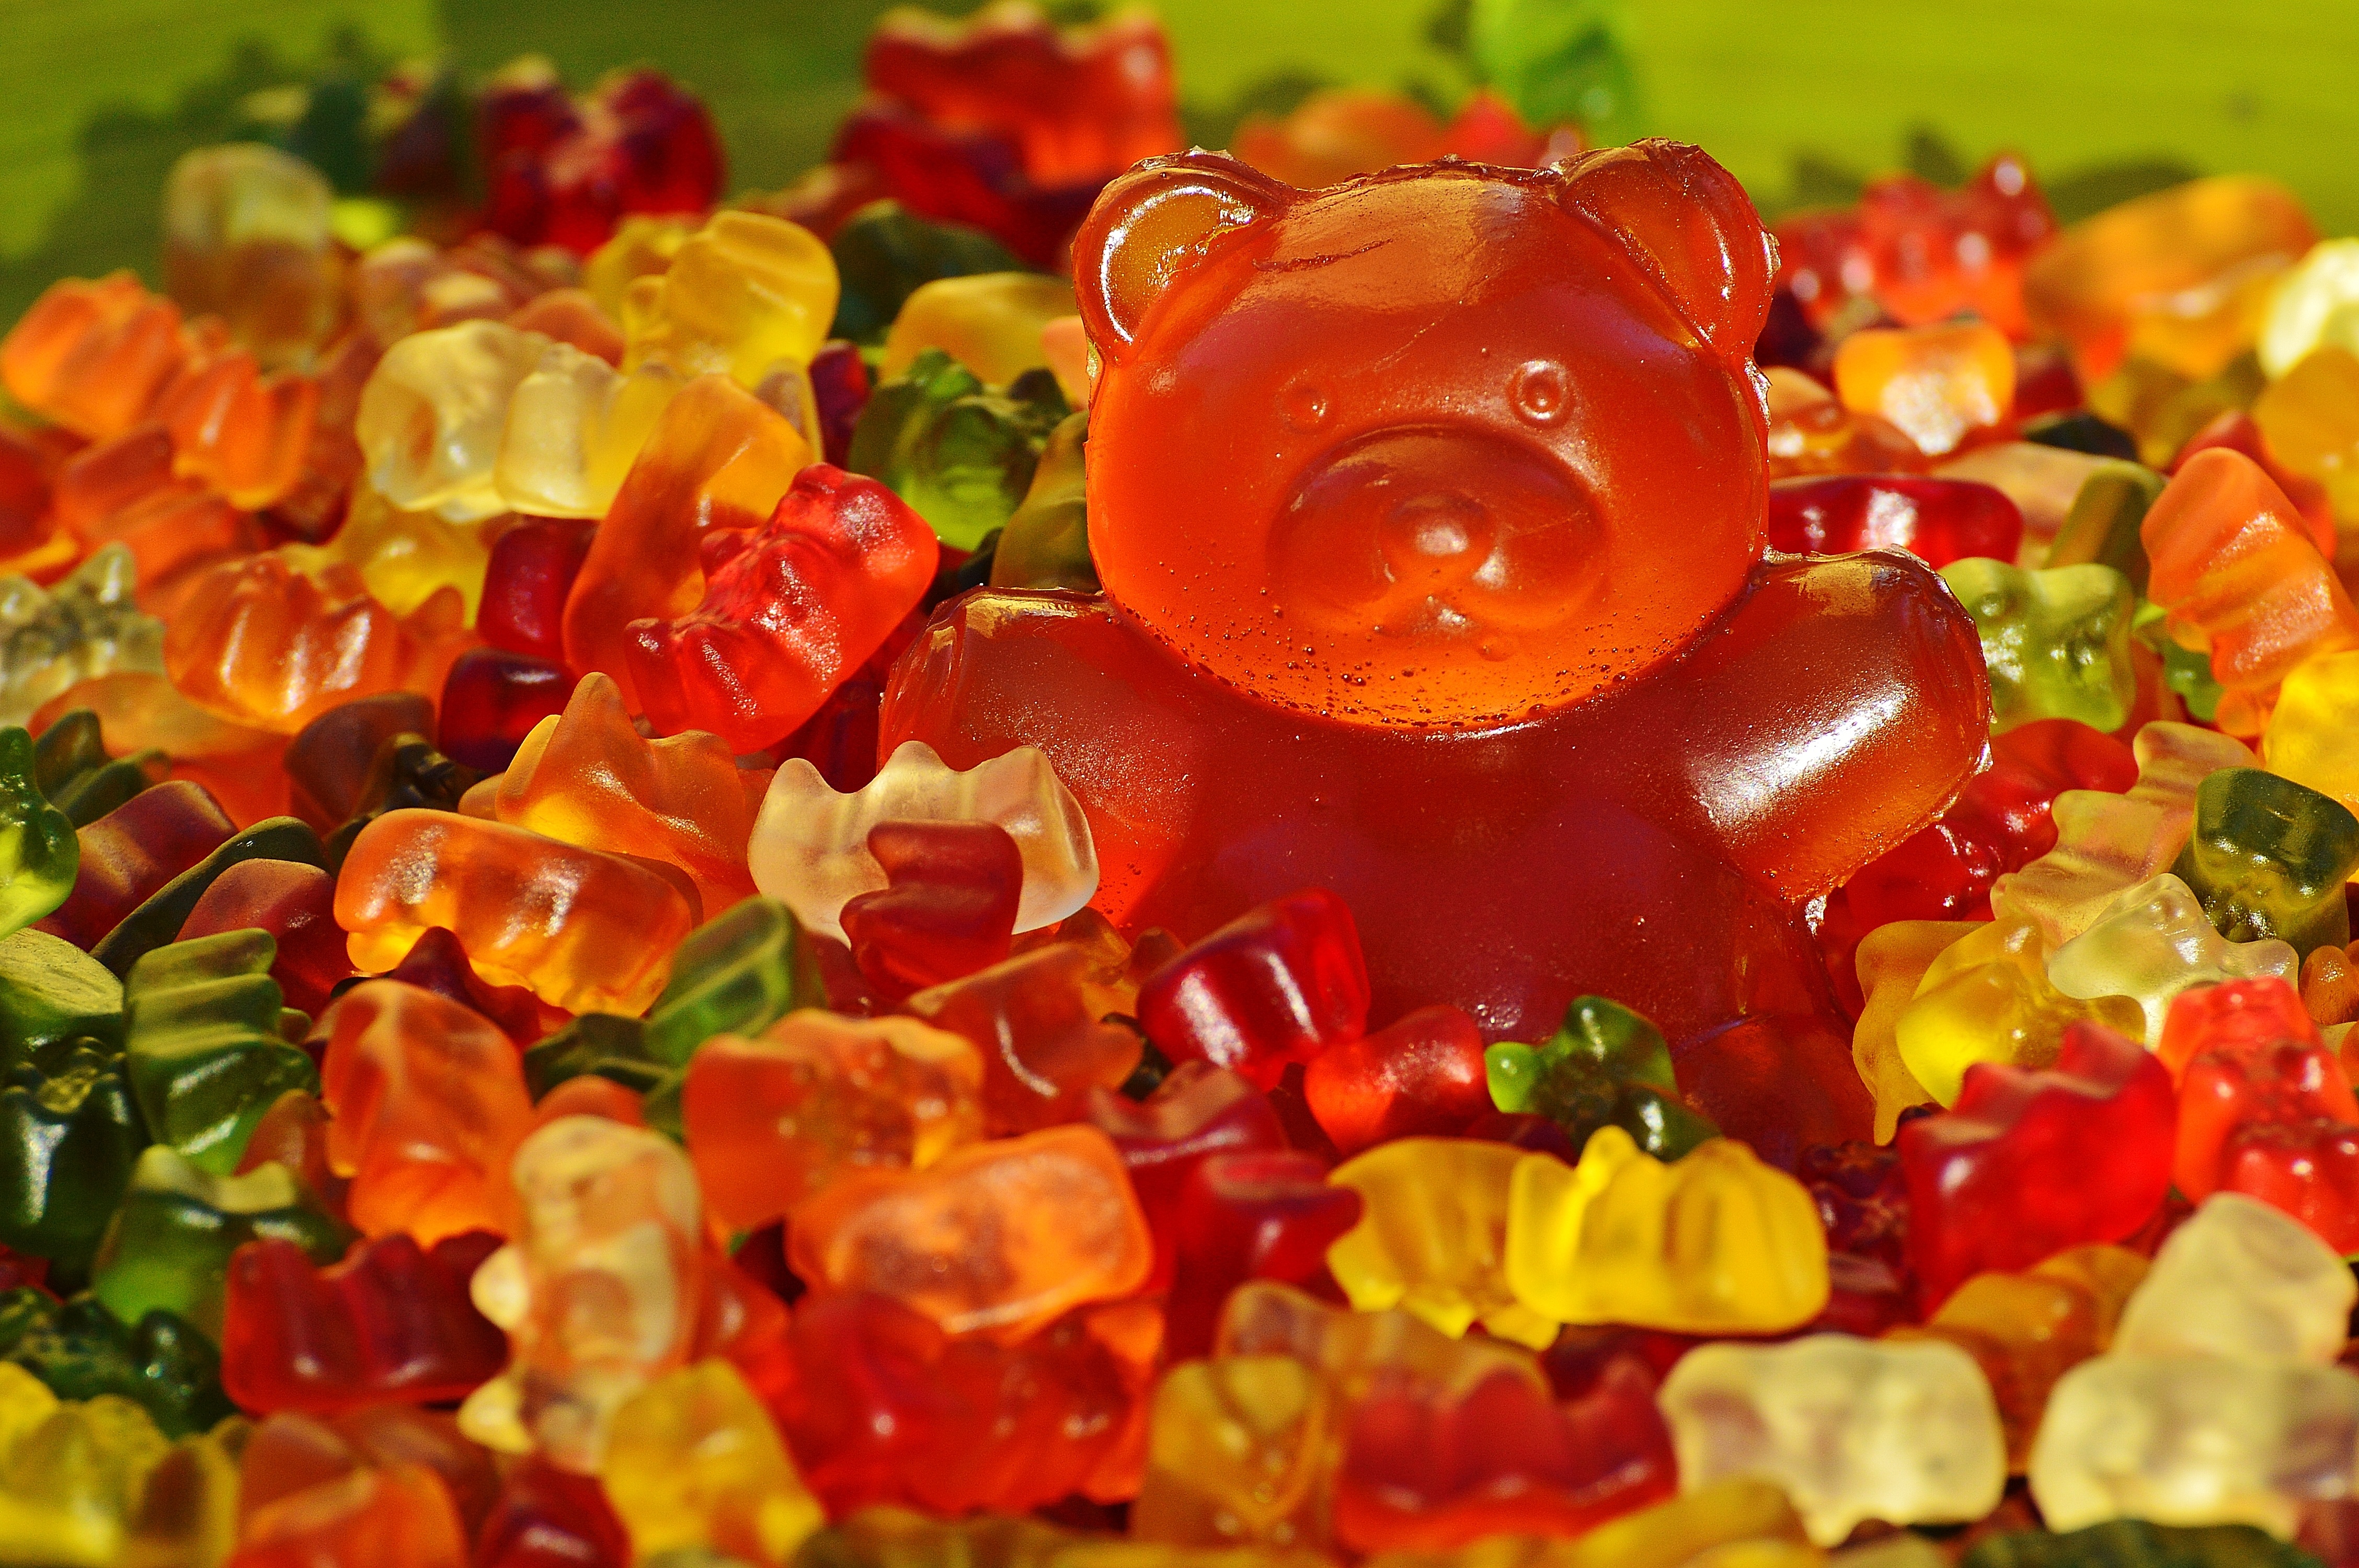 Food Gummy bear HD Wallpaper | Background Image